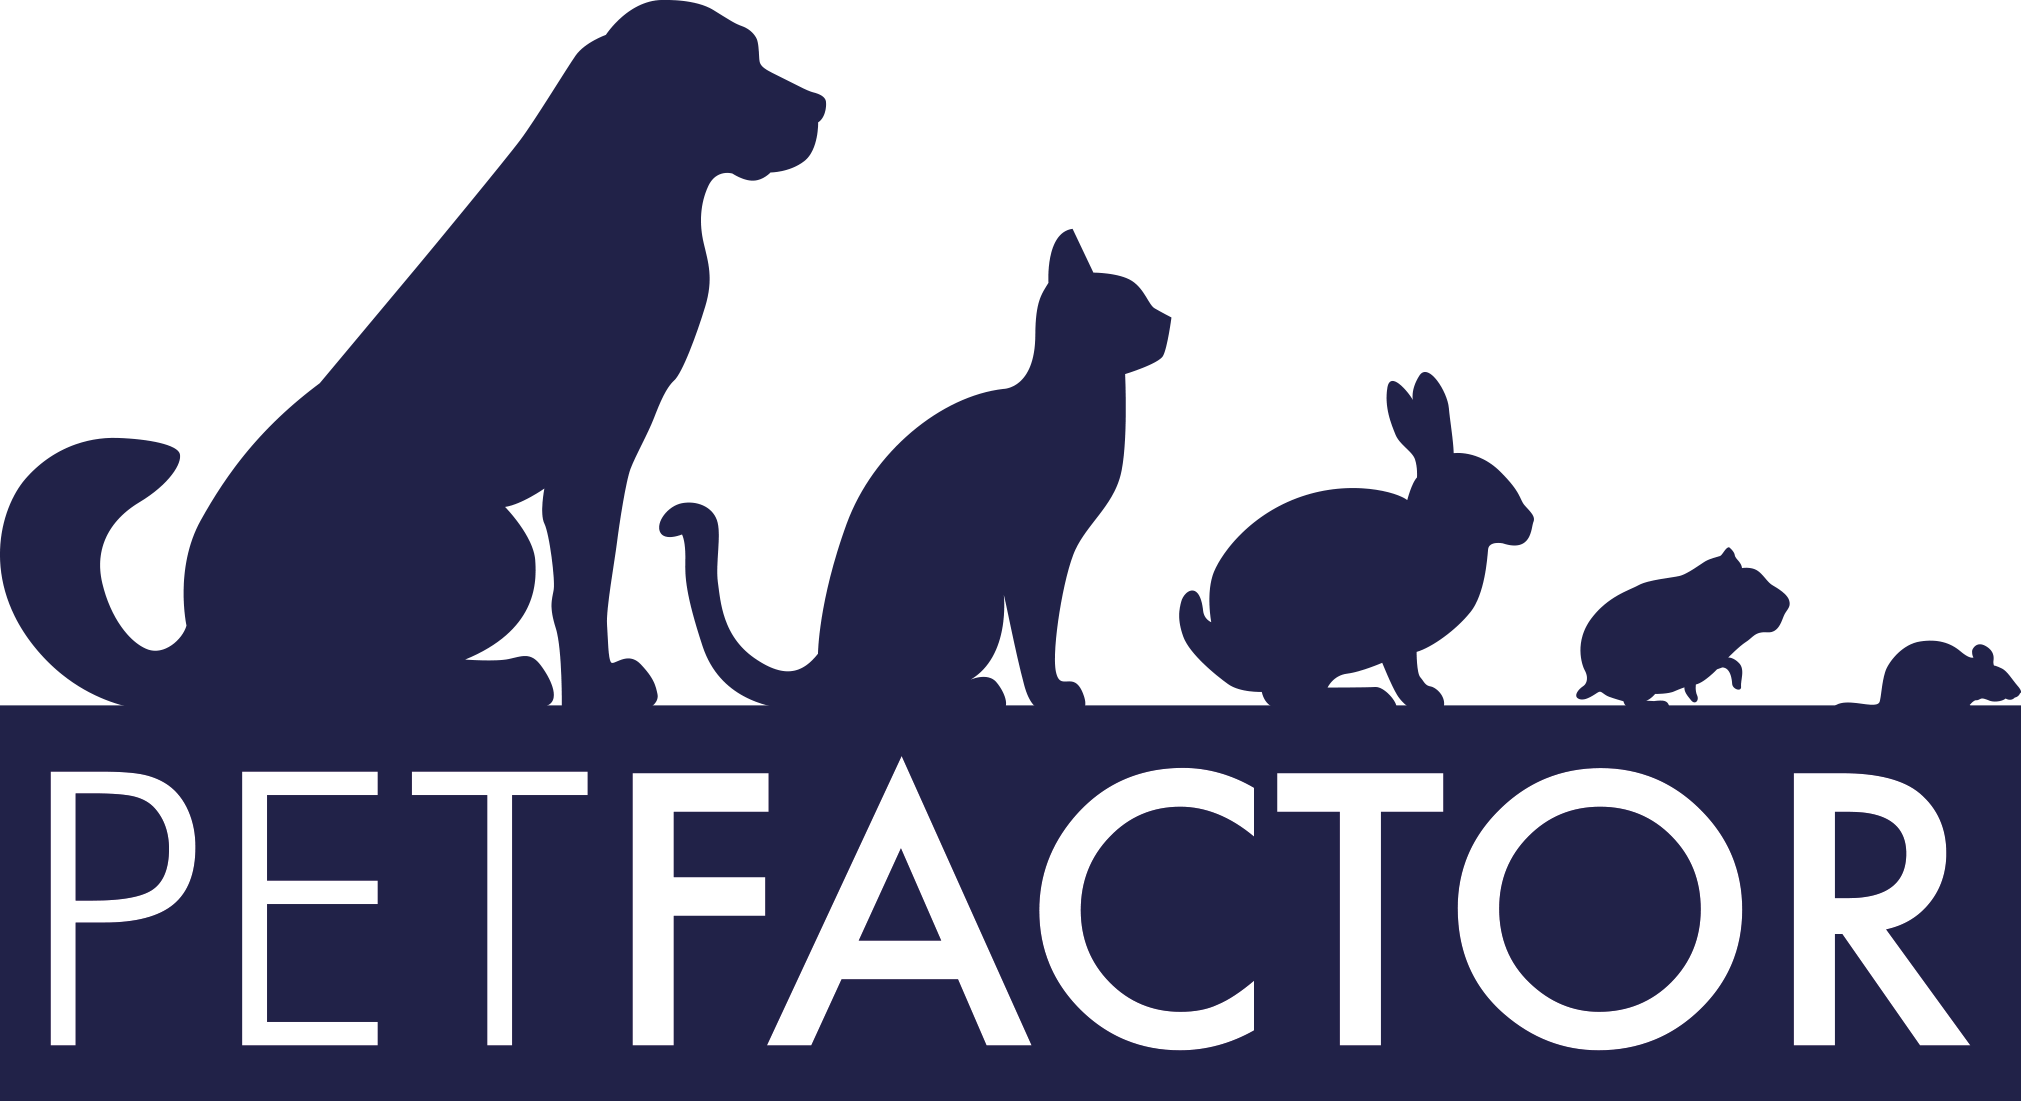 Pet Factor Wish You Happy Teachers Day